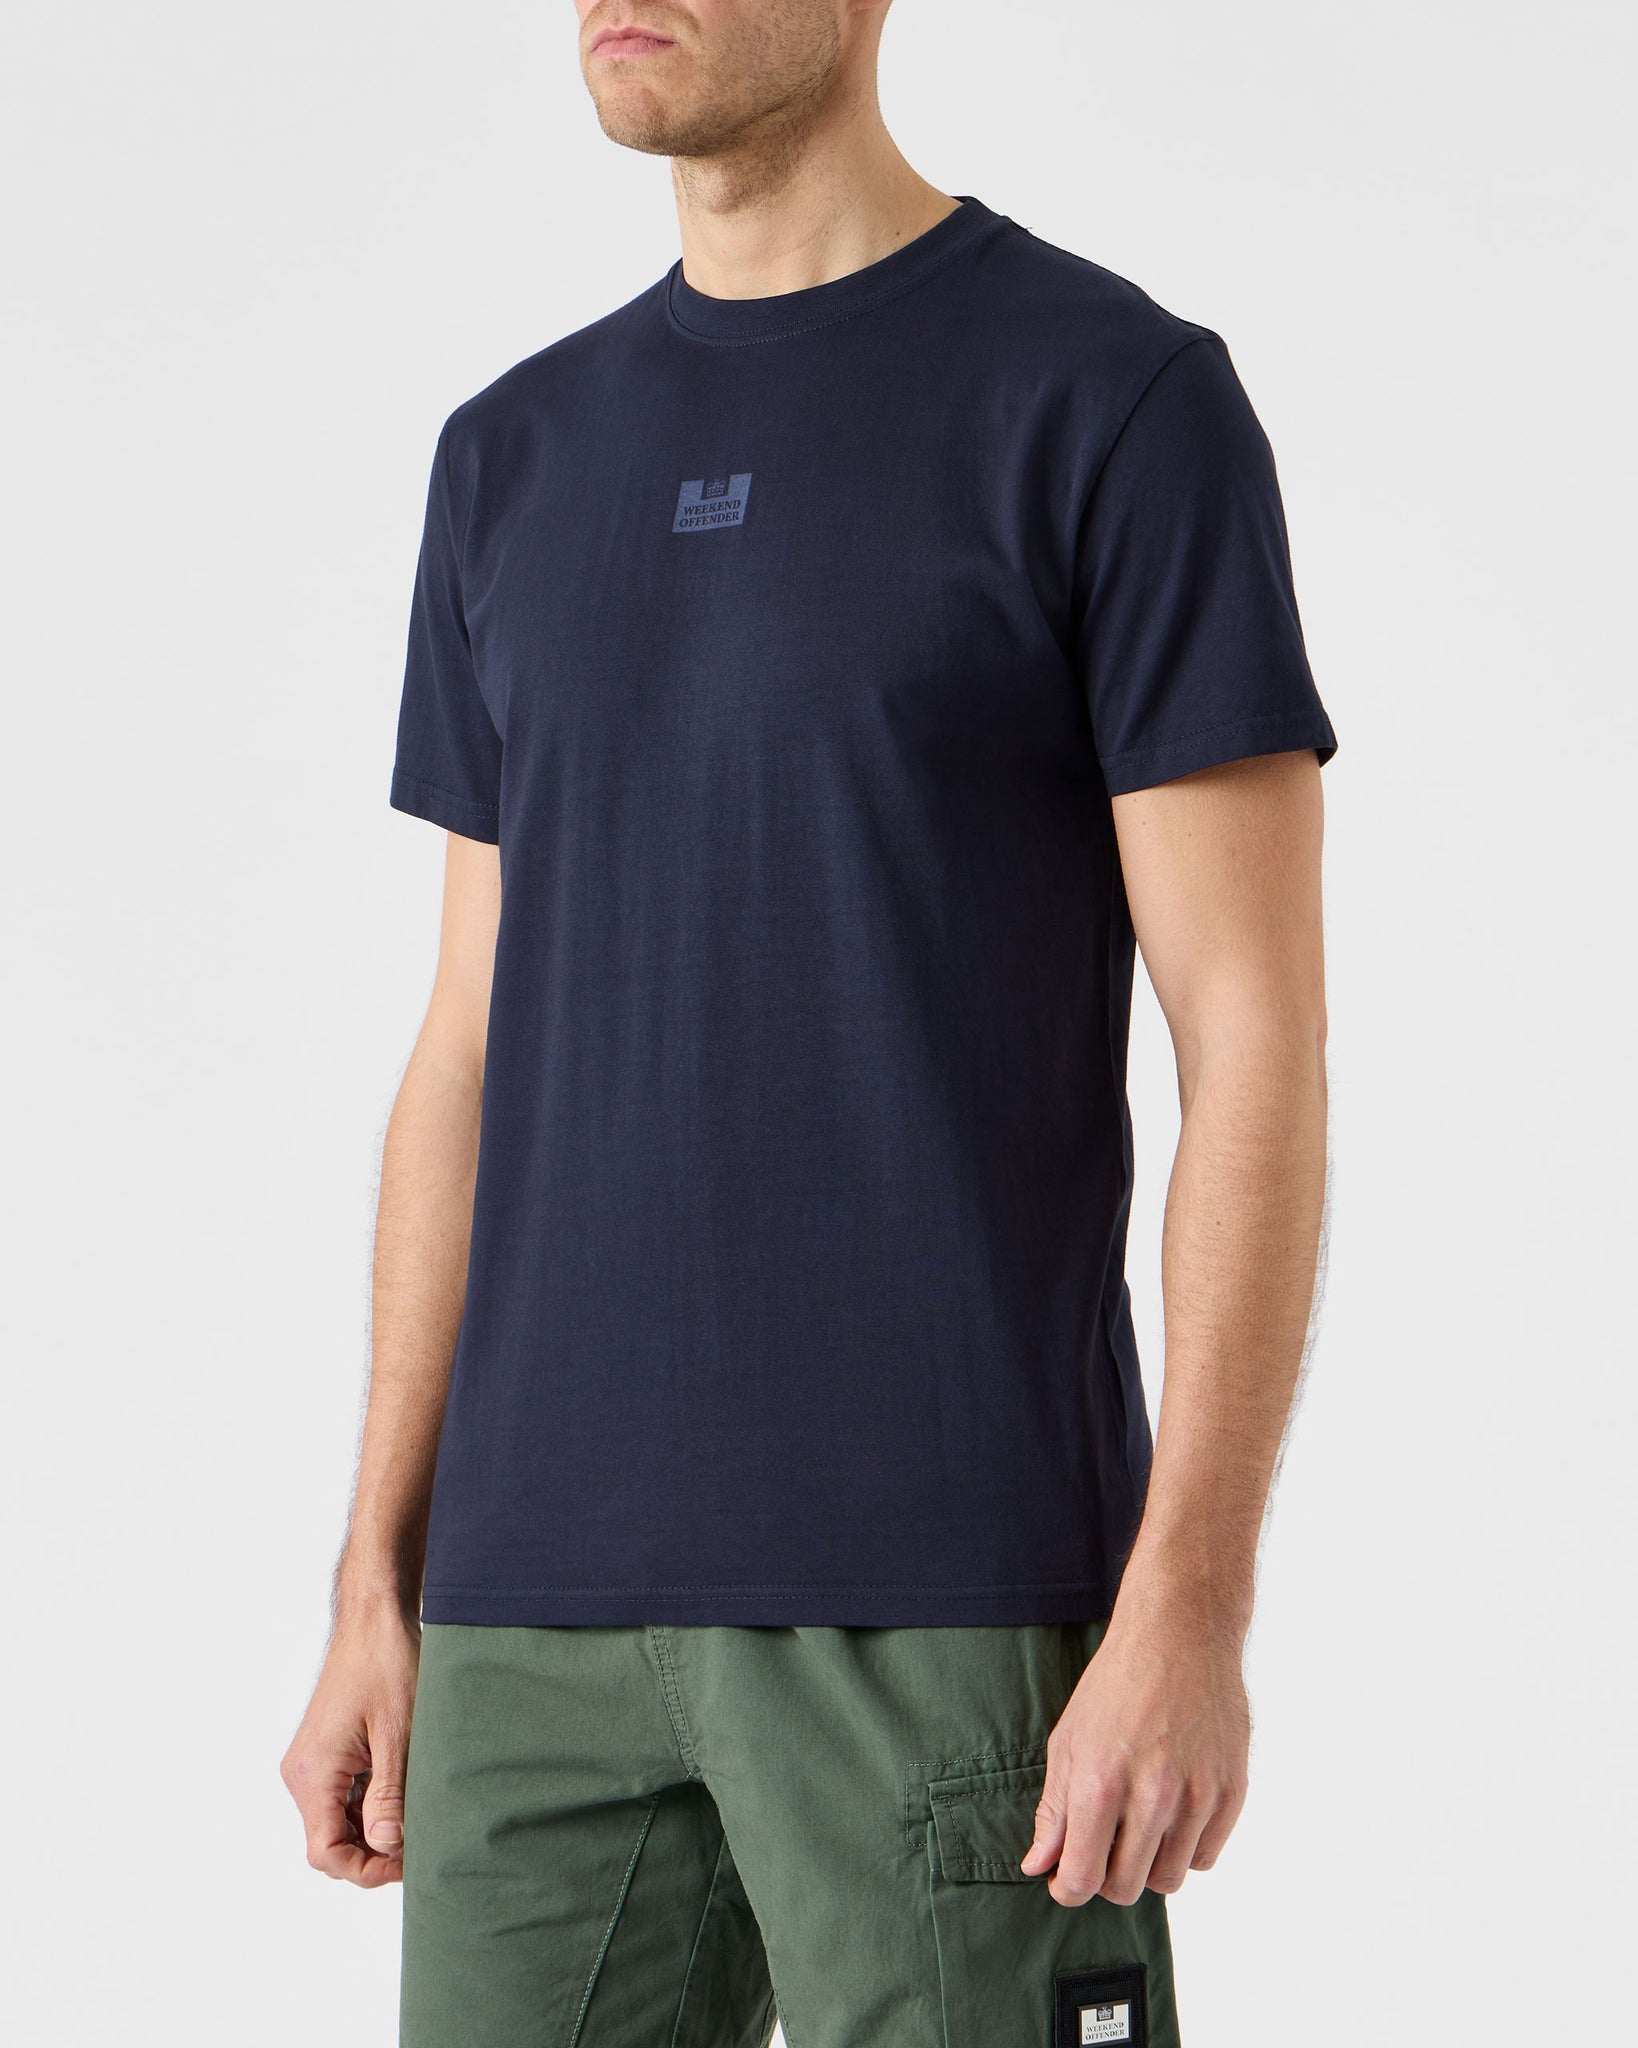 Thurman Garment Dye T-Shirt Navy